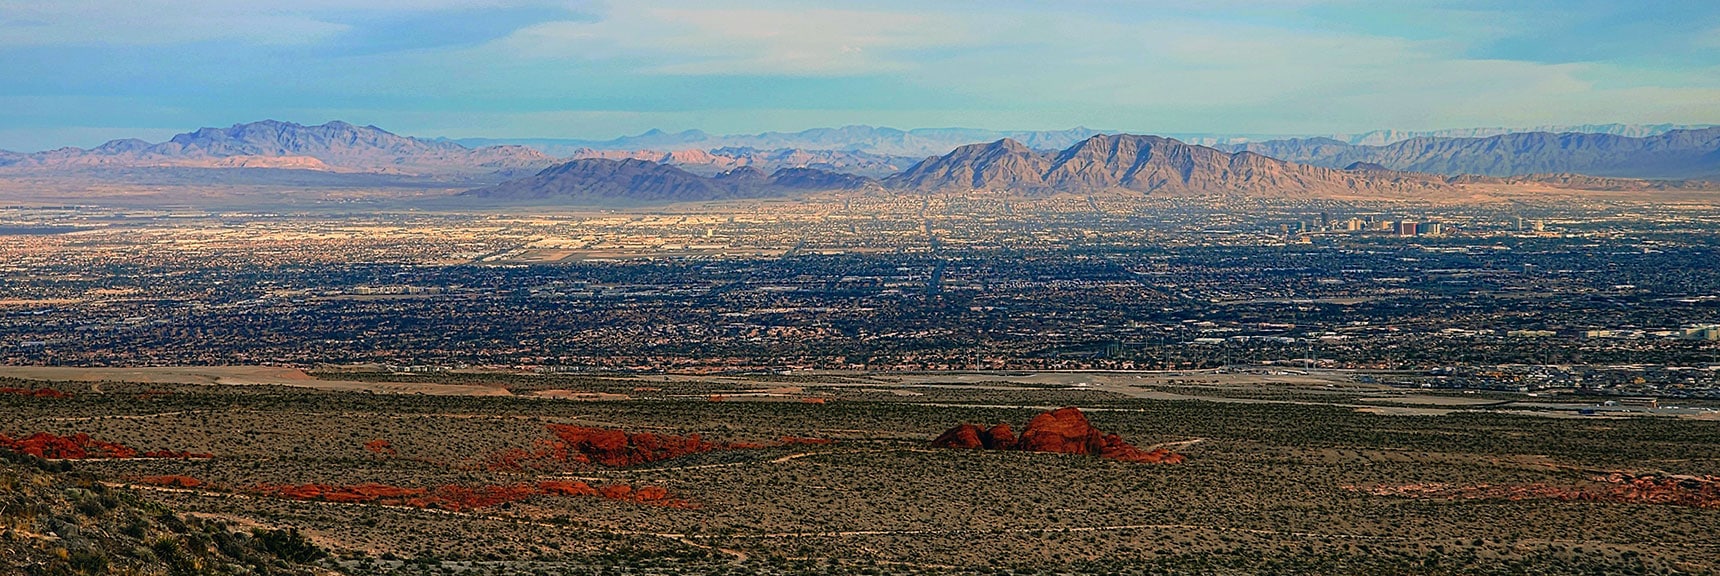 Right to Left: Frenchman Mt., Sunrise Mt., Muddy Mts. Little Red Rock Below | Damsel Peak Southeastern Slope | Calico & Brownstone Basins, Nevada